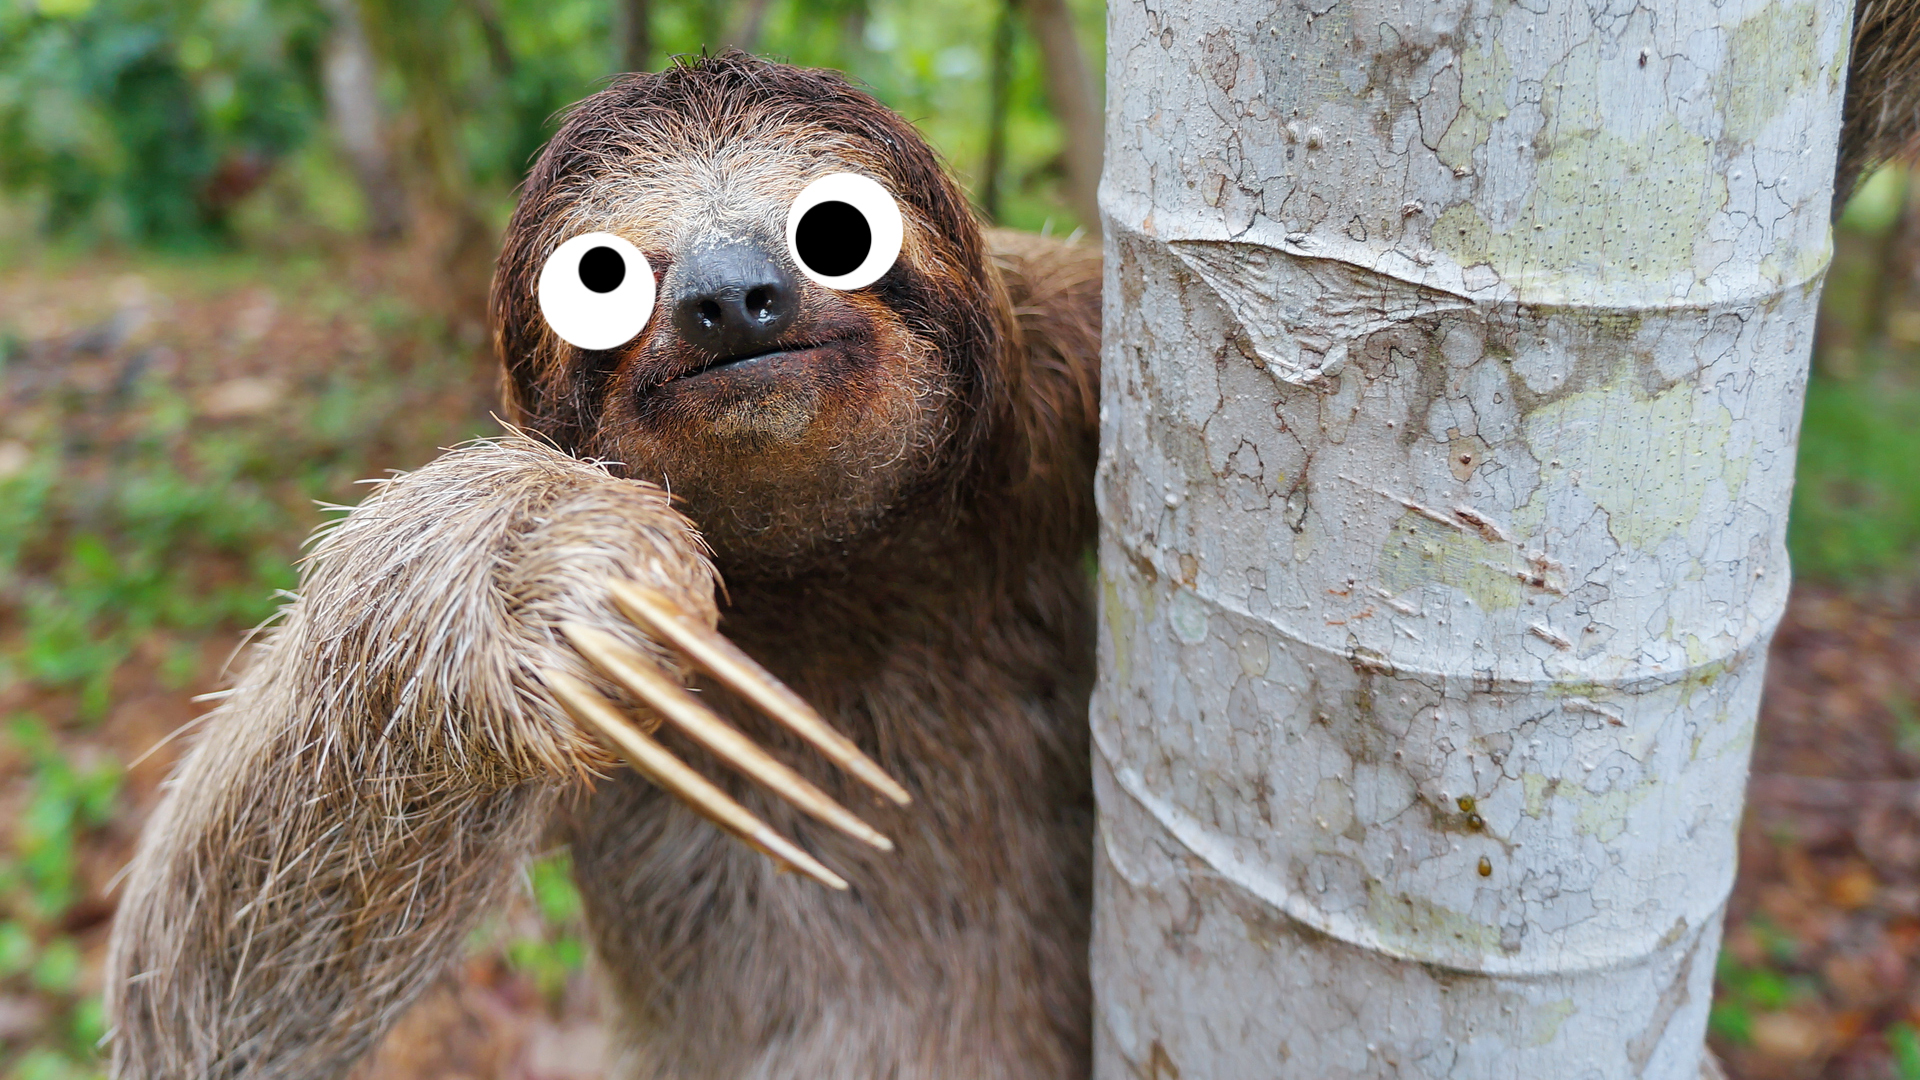 A sloth climbing down a tree trunk